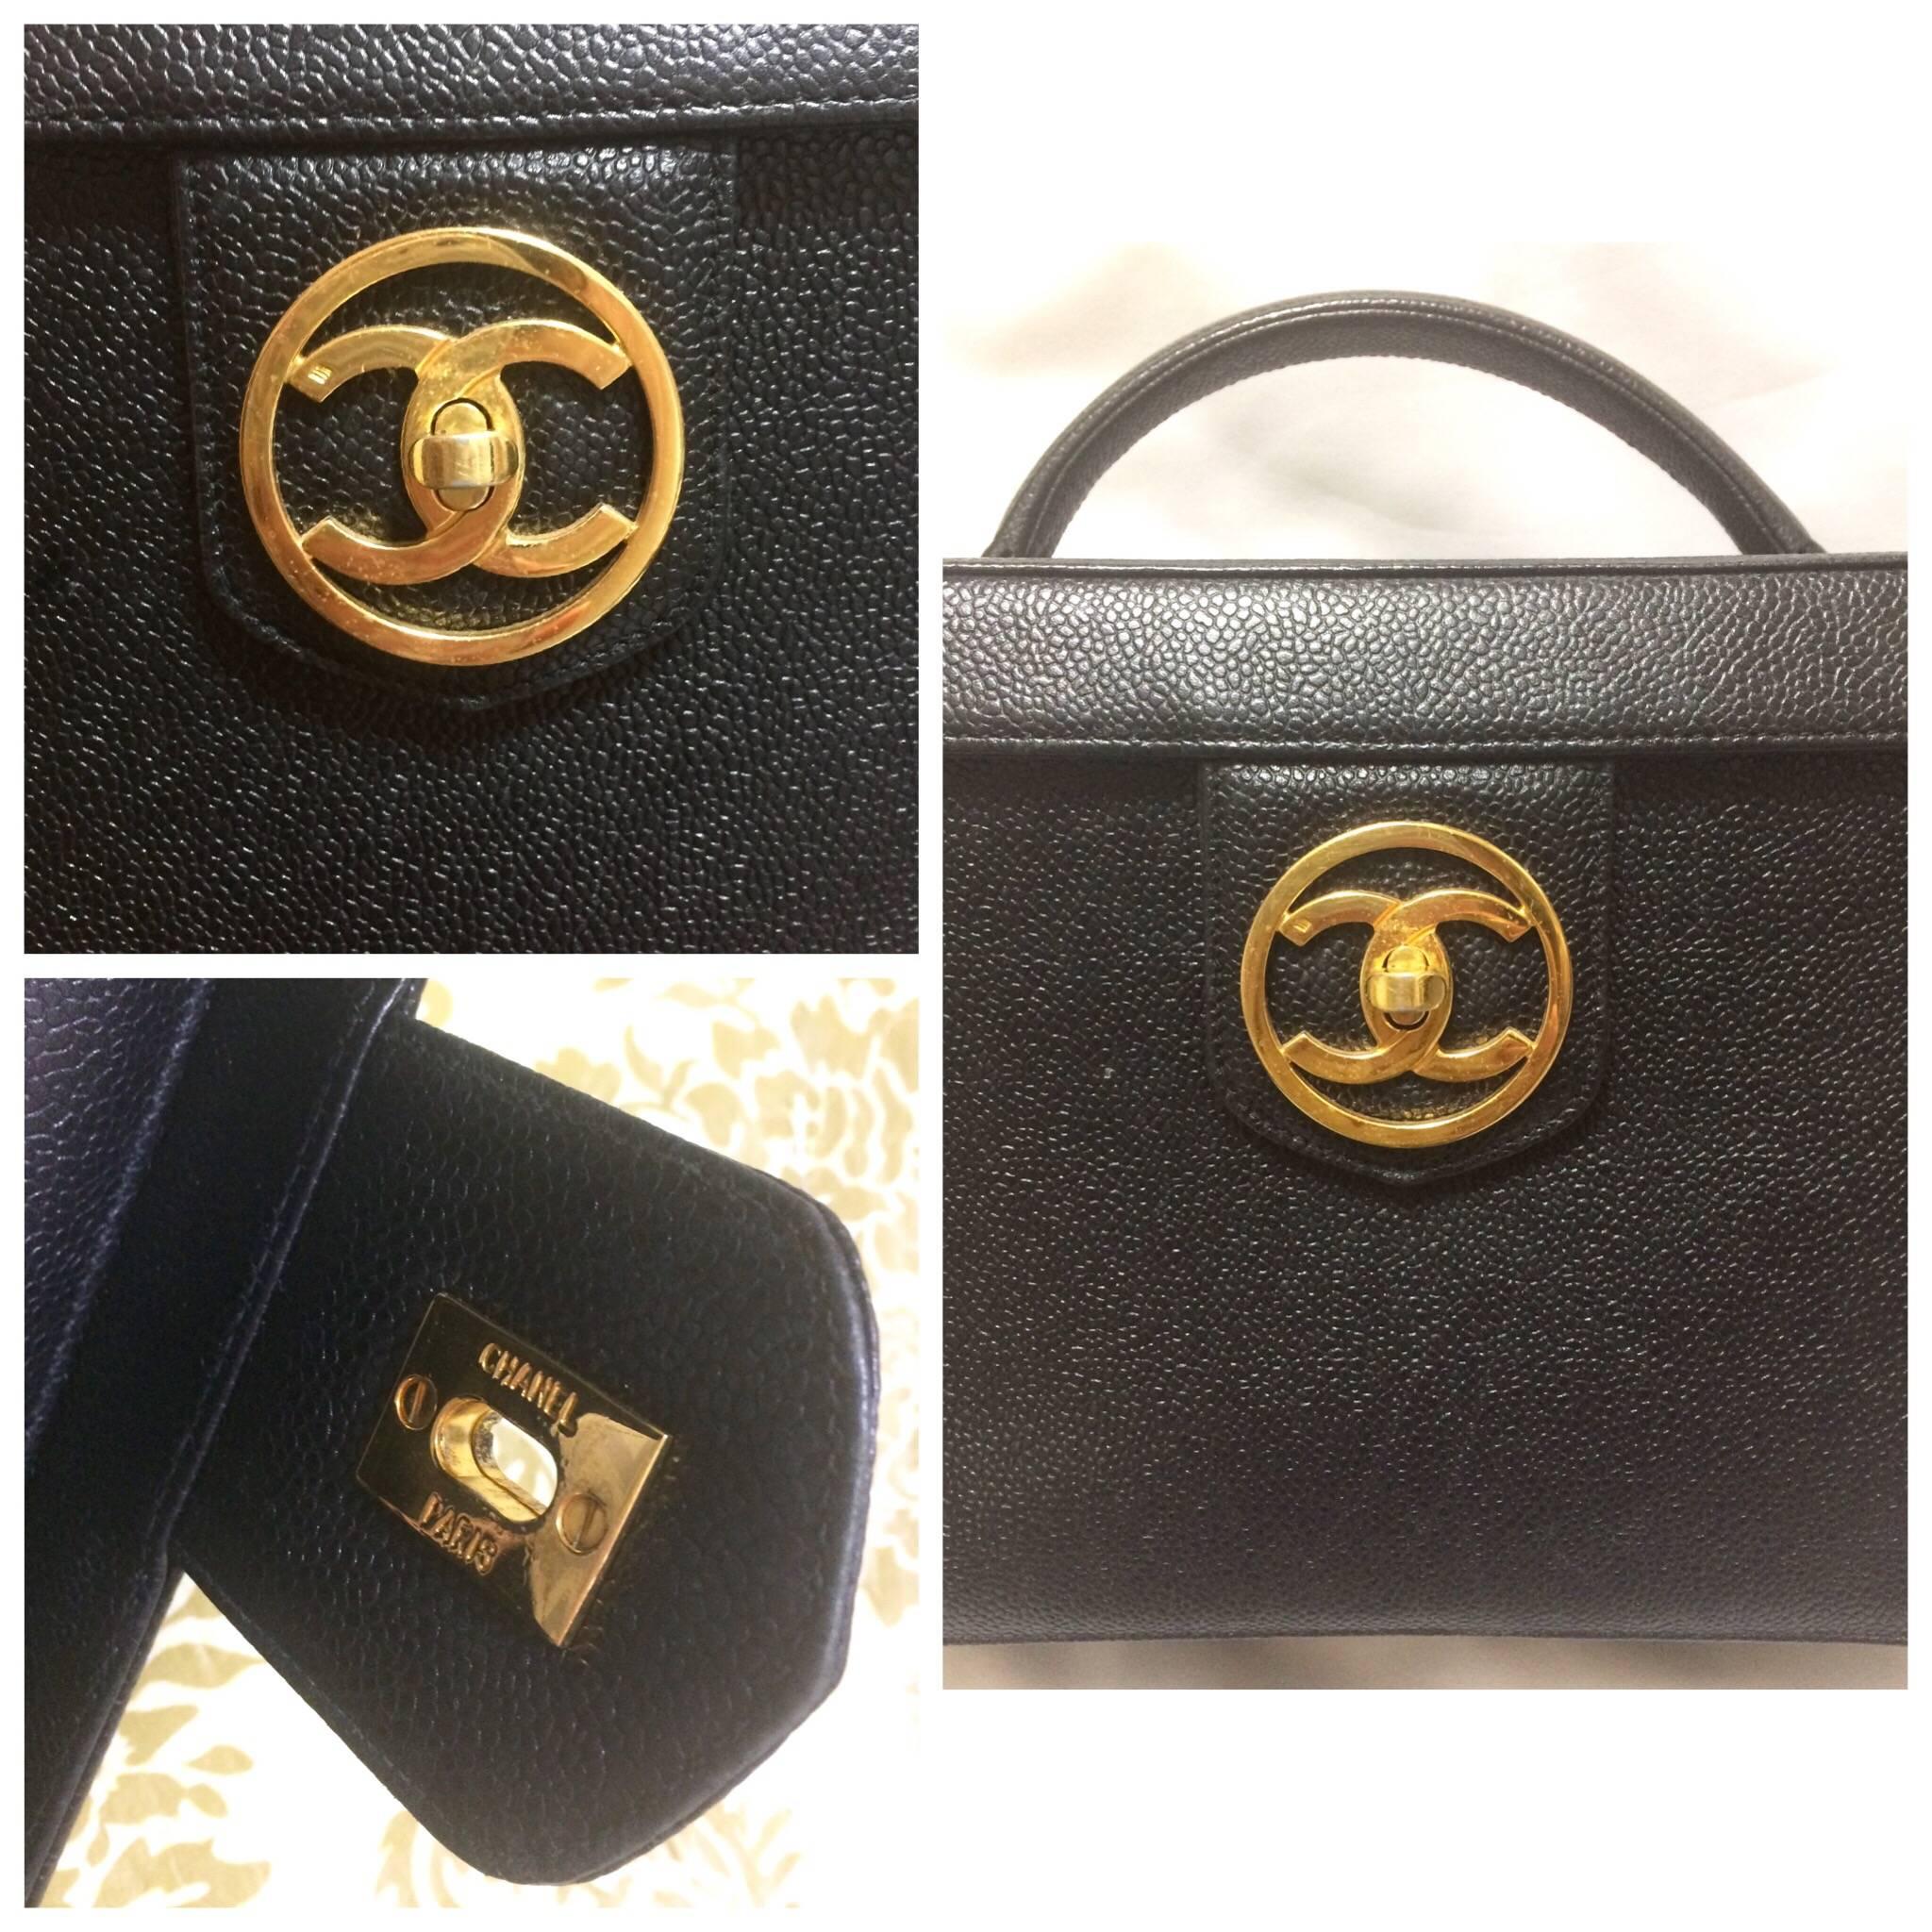 Black Vintage CHANEL black caviar leather large vanity purse, lunchbox style handbag.